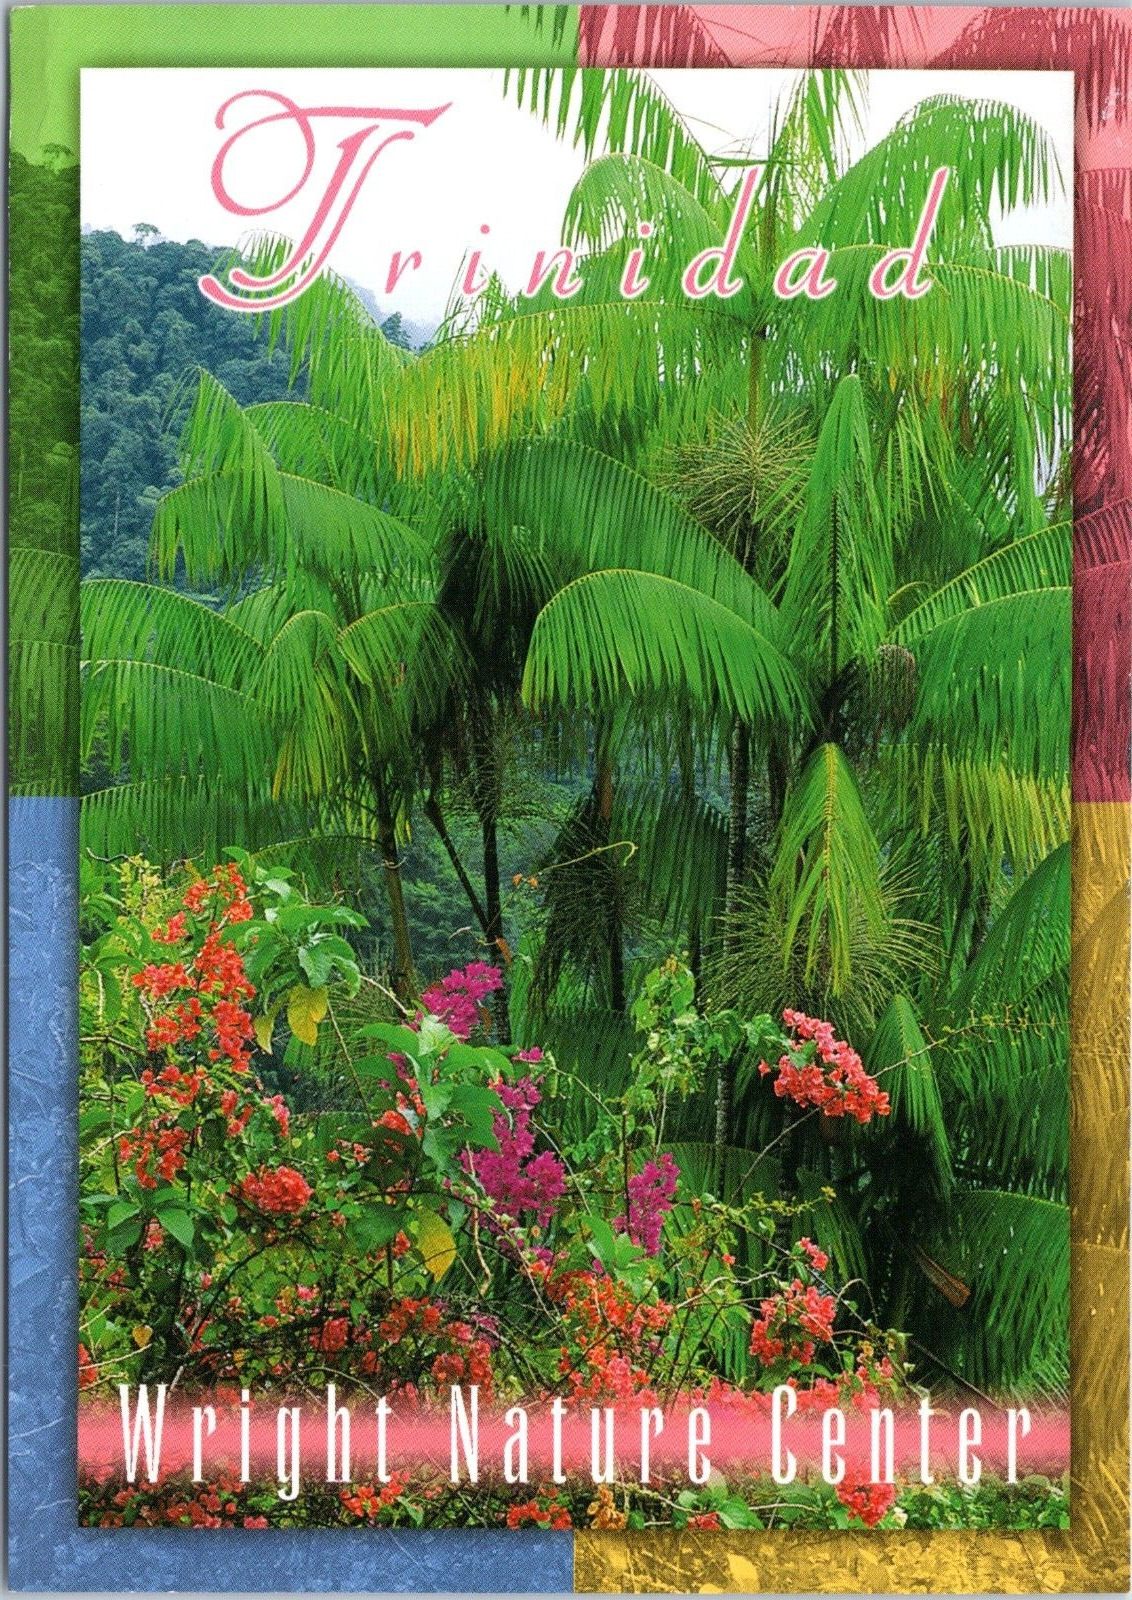 Asa Wright Nature Center, Trinidad - 4x6 Continental Chrome Postcard